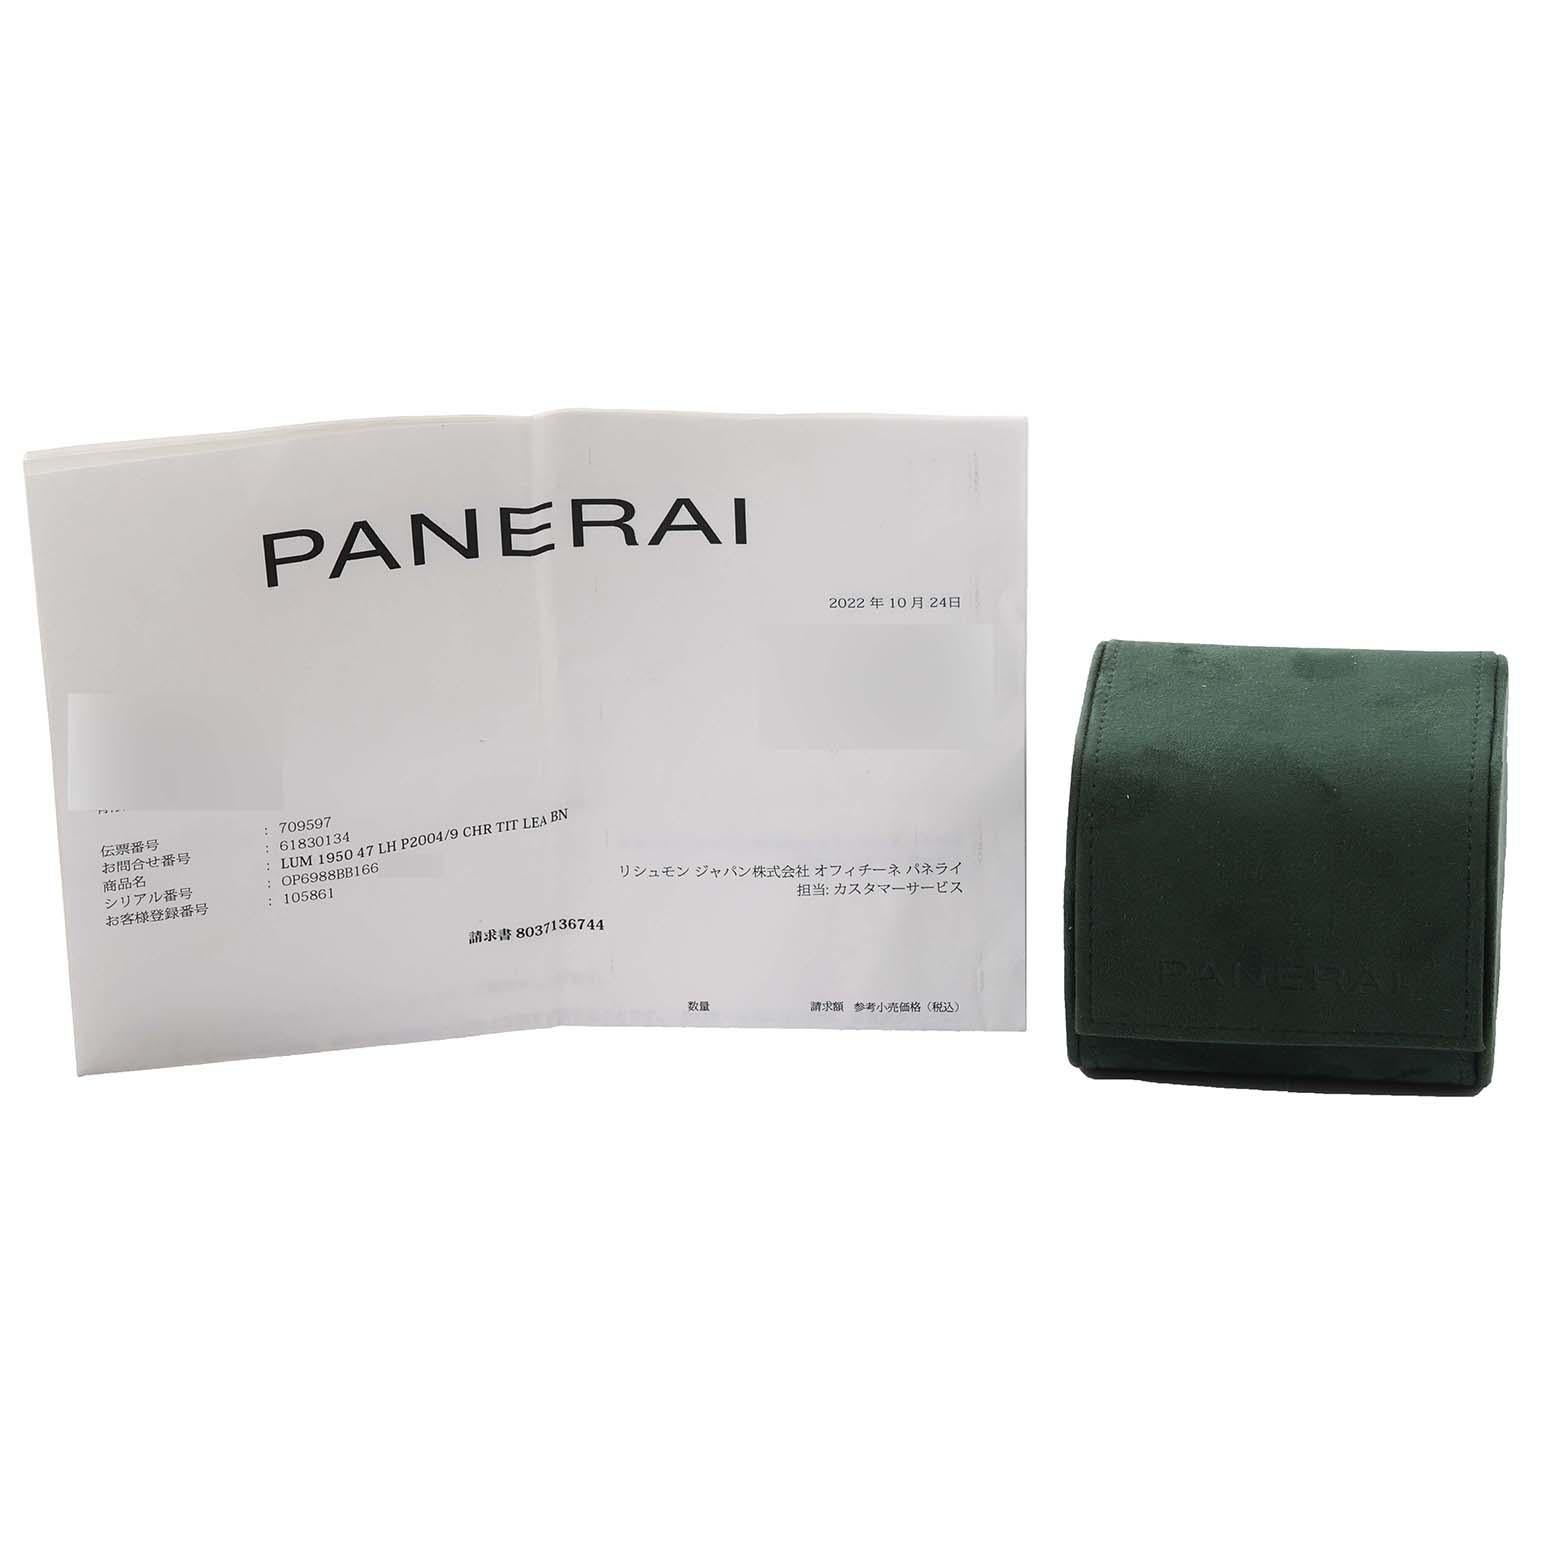 Panerai Luminor 1950 Chrono Monopulsate Left Handed Titanium Mens Watch PAM00579 For Sale 4